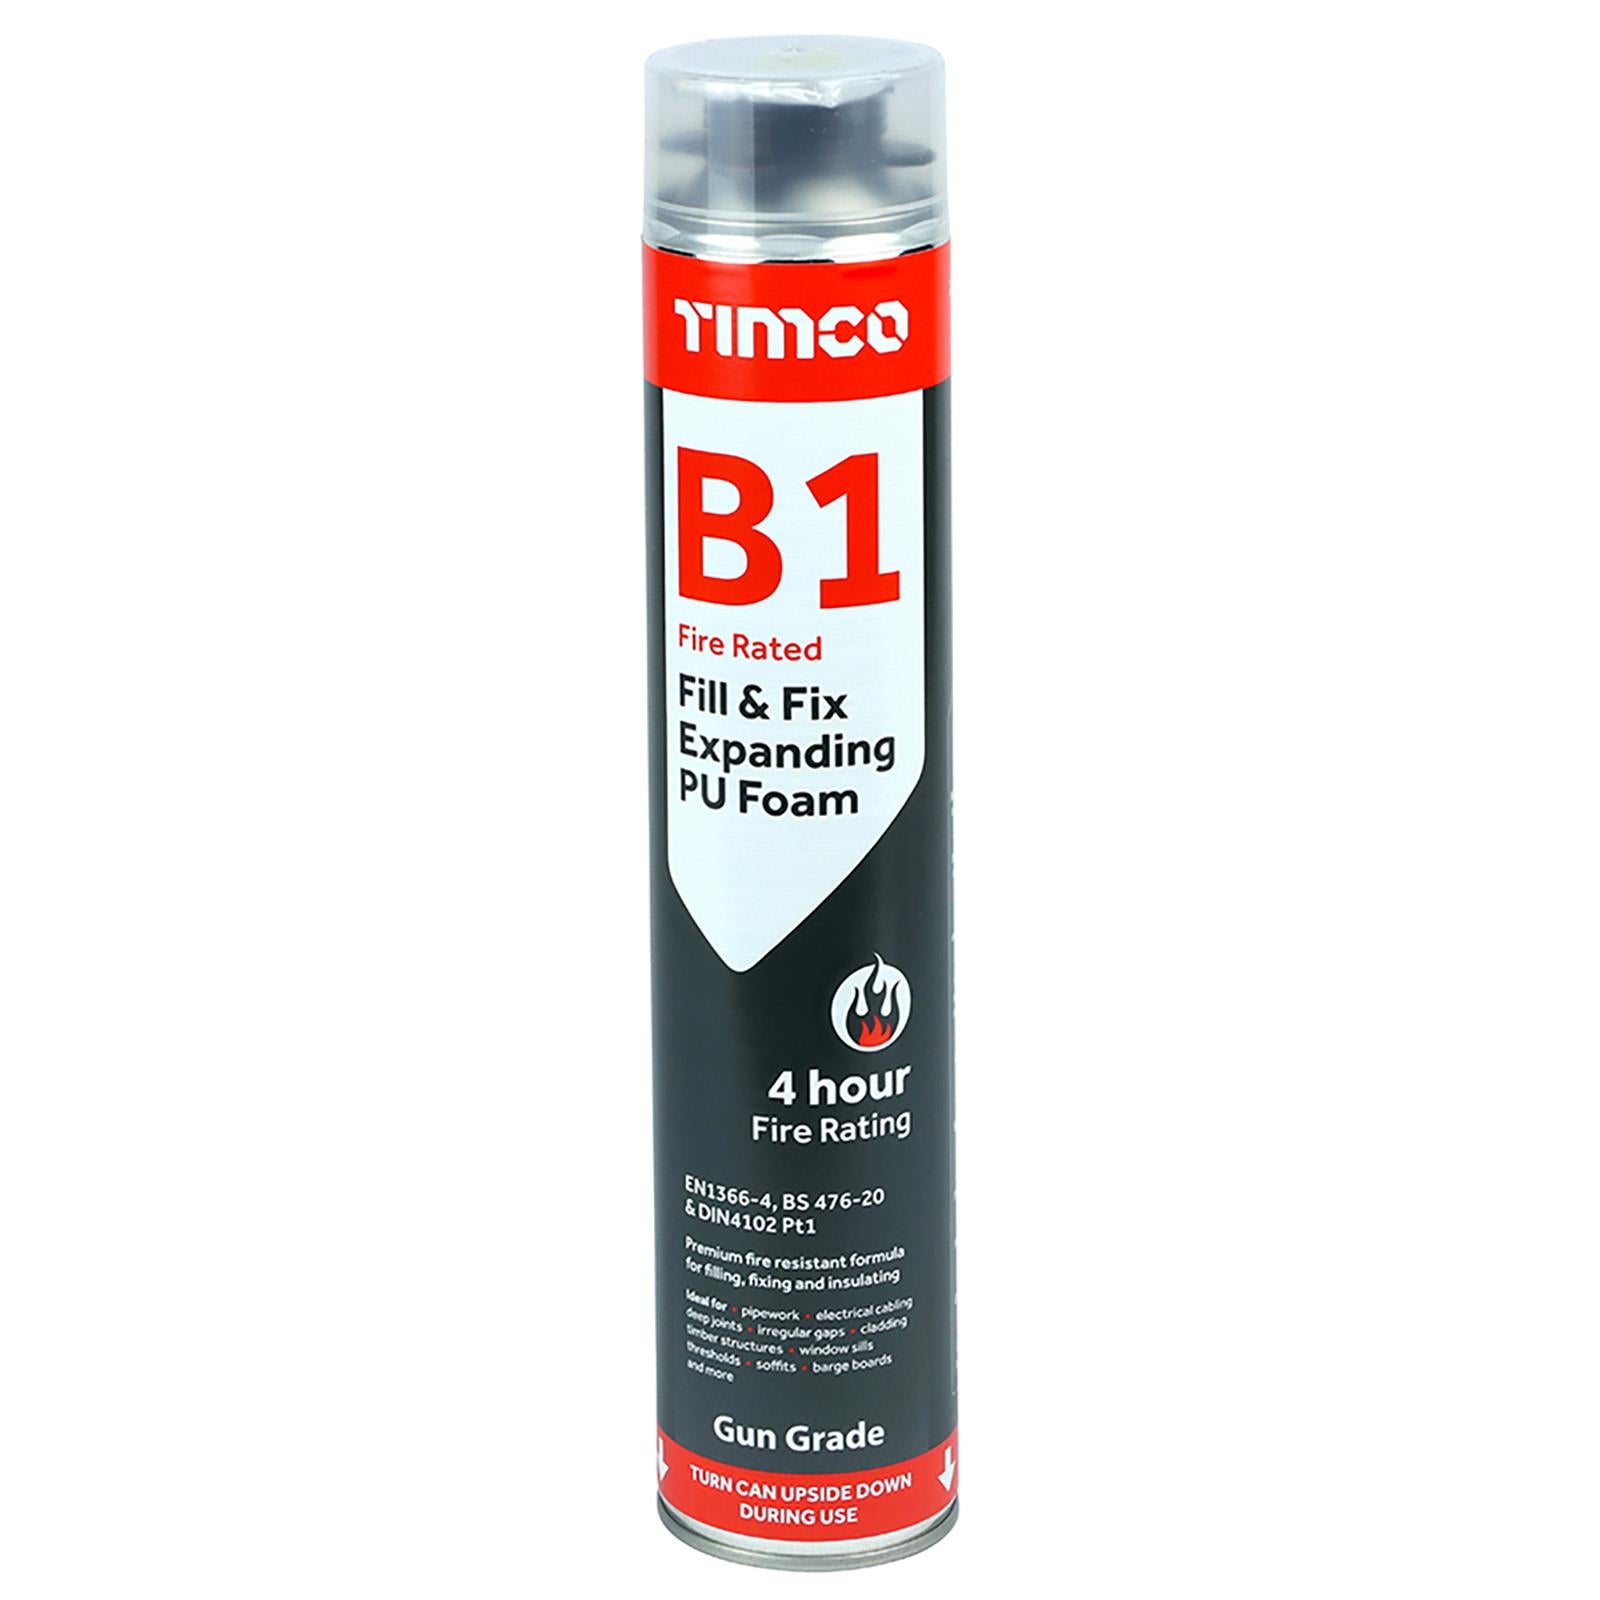 TIMCO B1 Fill and Fix Expanding PU Foam Fire Rated 750ml Can Gun Grade